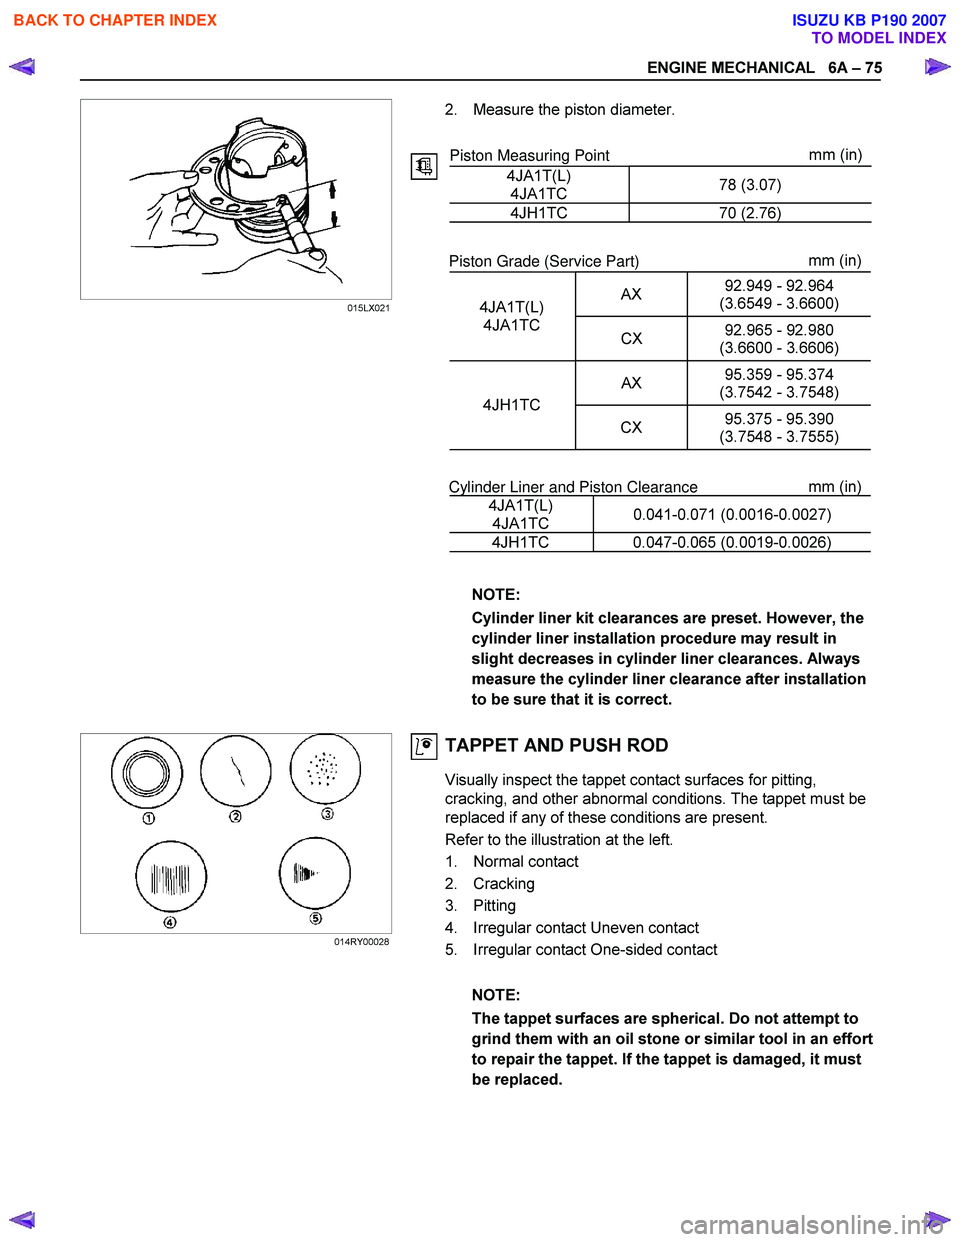 ISUZU KB P190 2007  Workshop Repair Manual ENGINE MECHANICAL   6A – 75 
 
 
   
 
 
 
 
 
  
 
 
 
 
 
 
 
 
 
 
 
 
 
 
 
 
 
 
 
 
 
 
 
 
 
 
 
 
 
 
 
  
 
2.  Measure the piston diameter.  
   
Piston Measuring Point  mm (in)
4JA1T(L)  